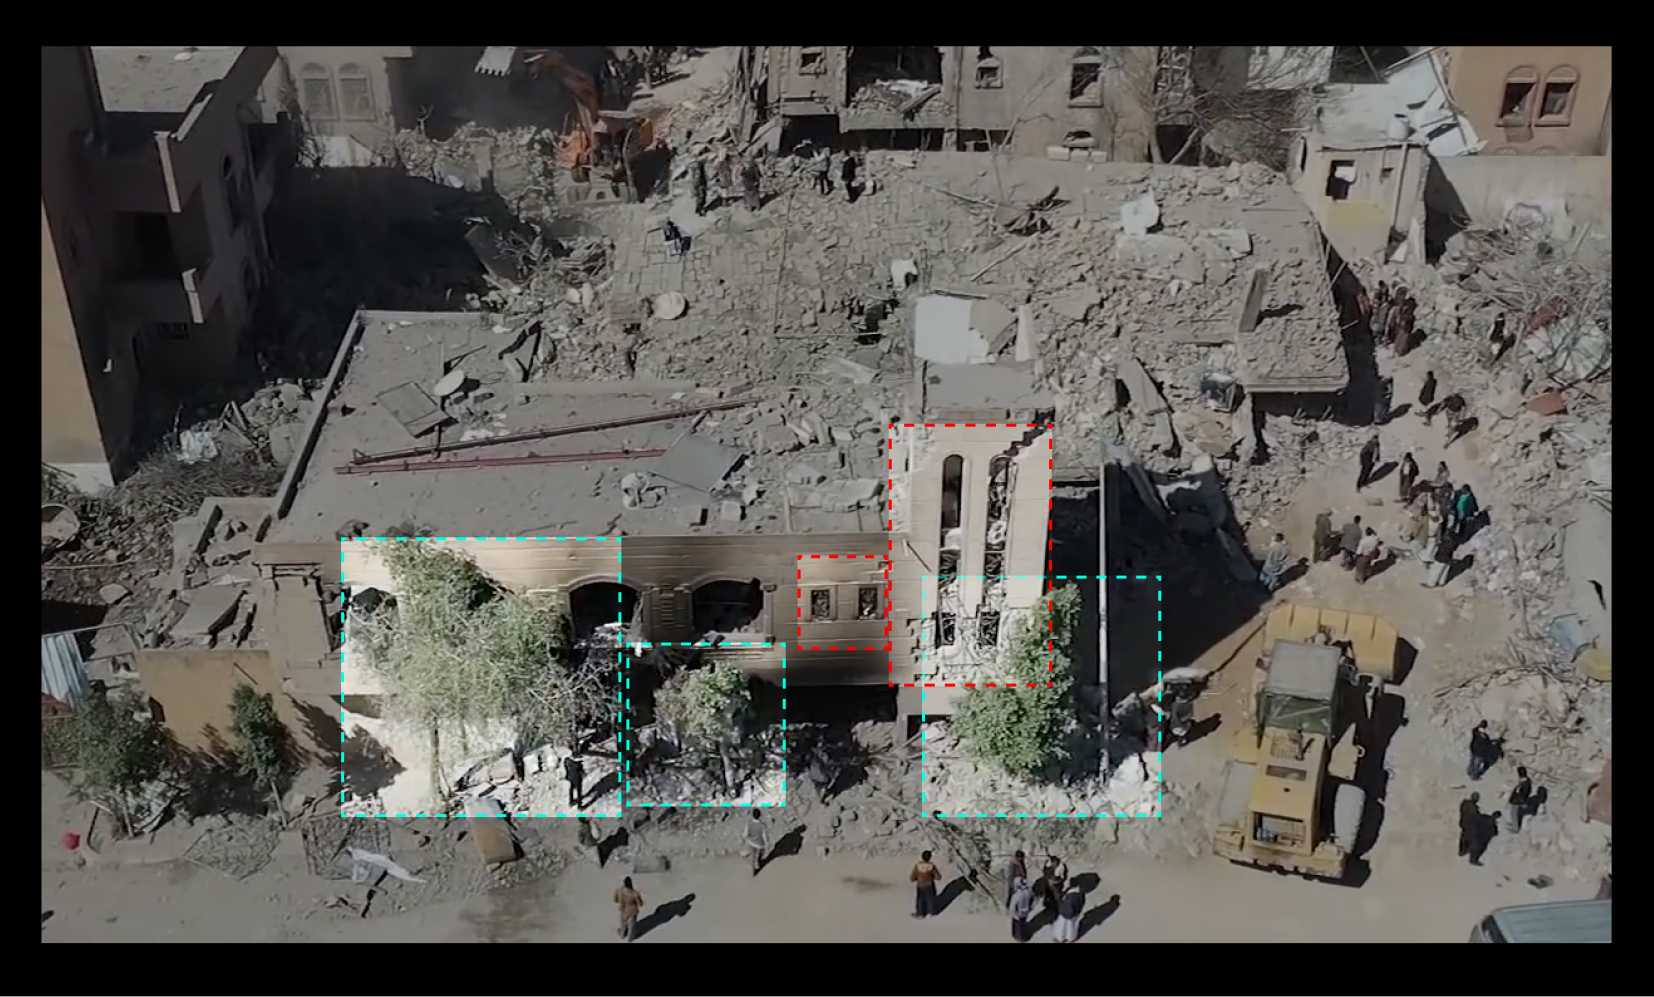 Bombing houses in Al-Libi residential neighborhood of Sanaa